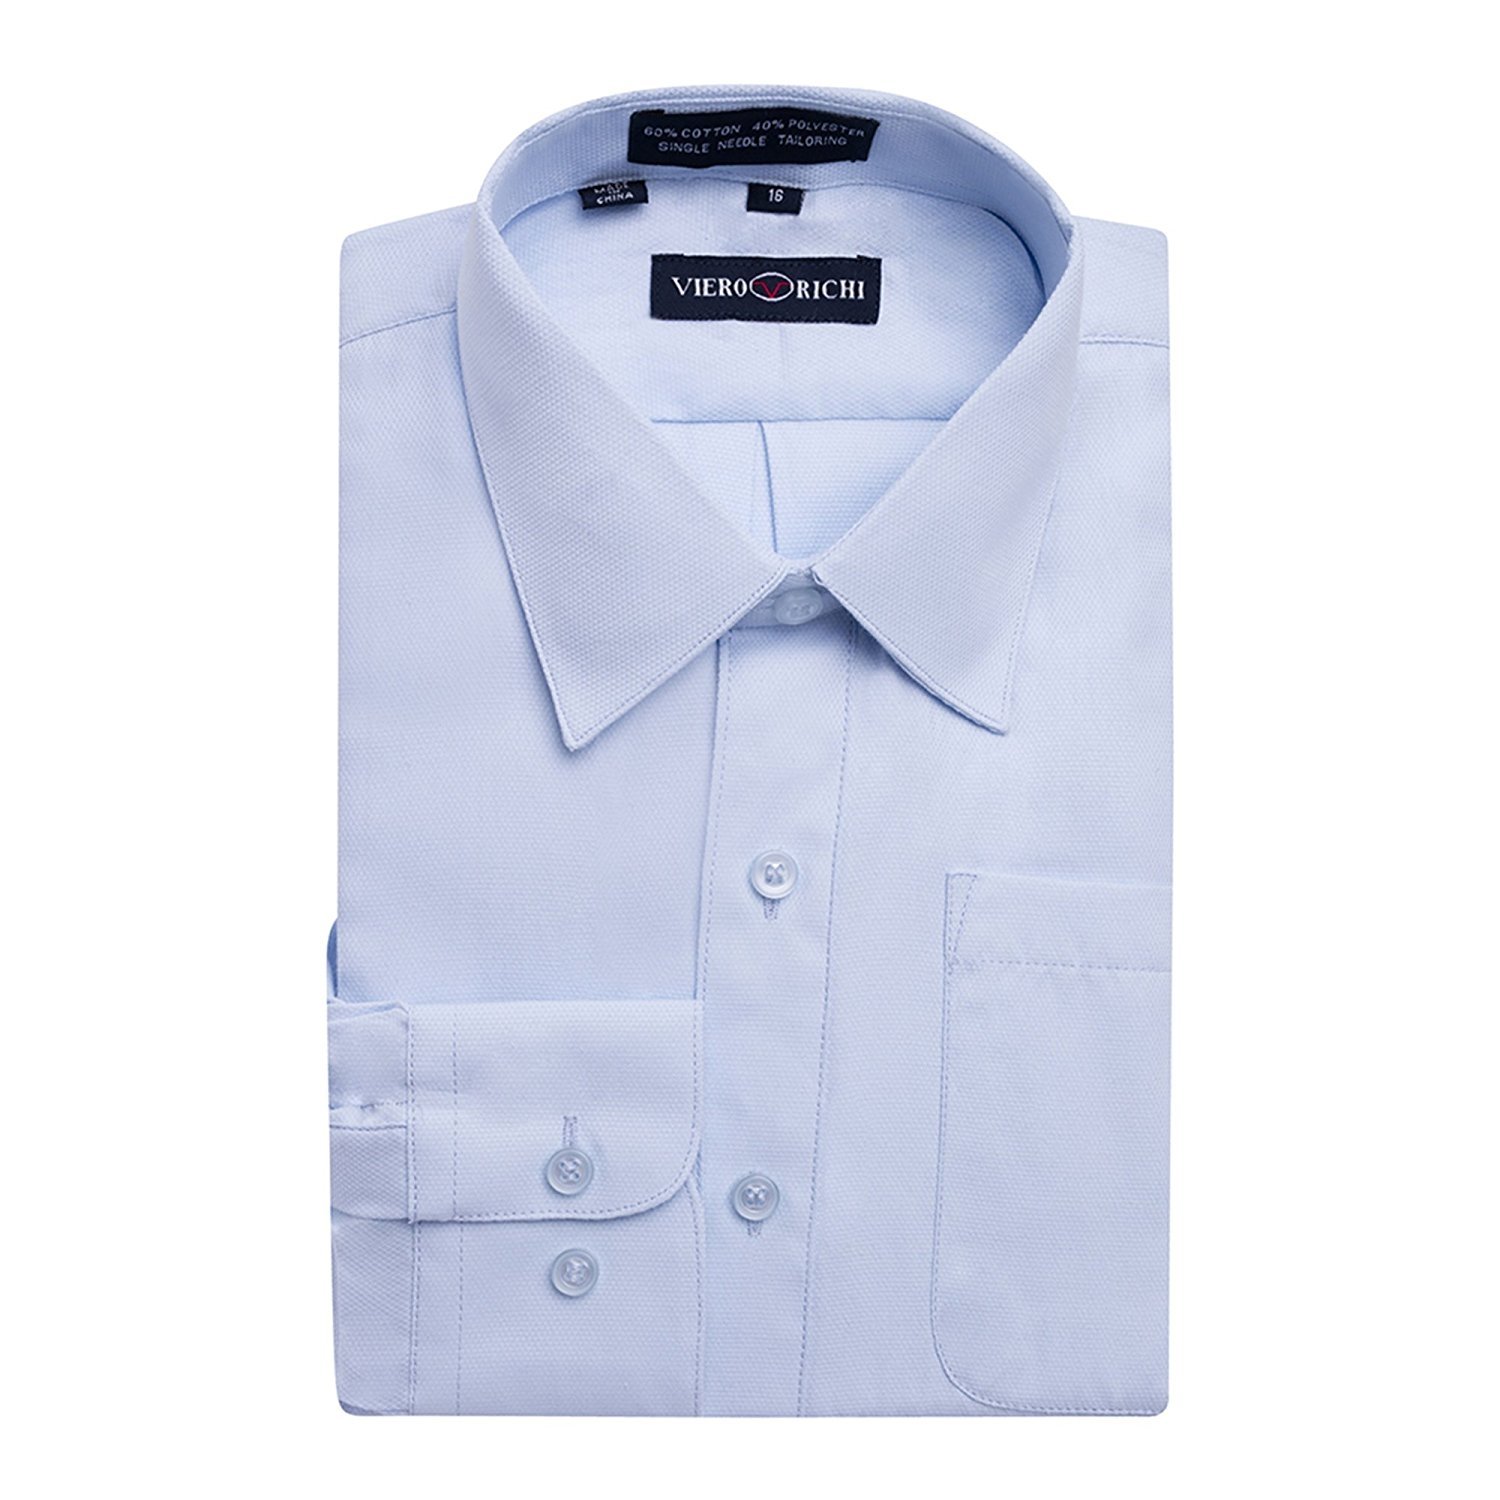 Boys New French Toast White Broadcloth Long Sleeve Dress Shirt All Husky Sizes